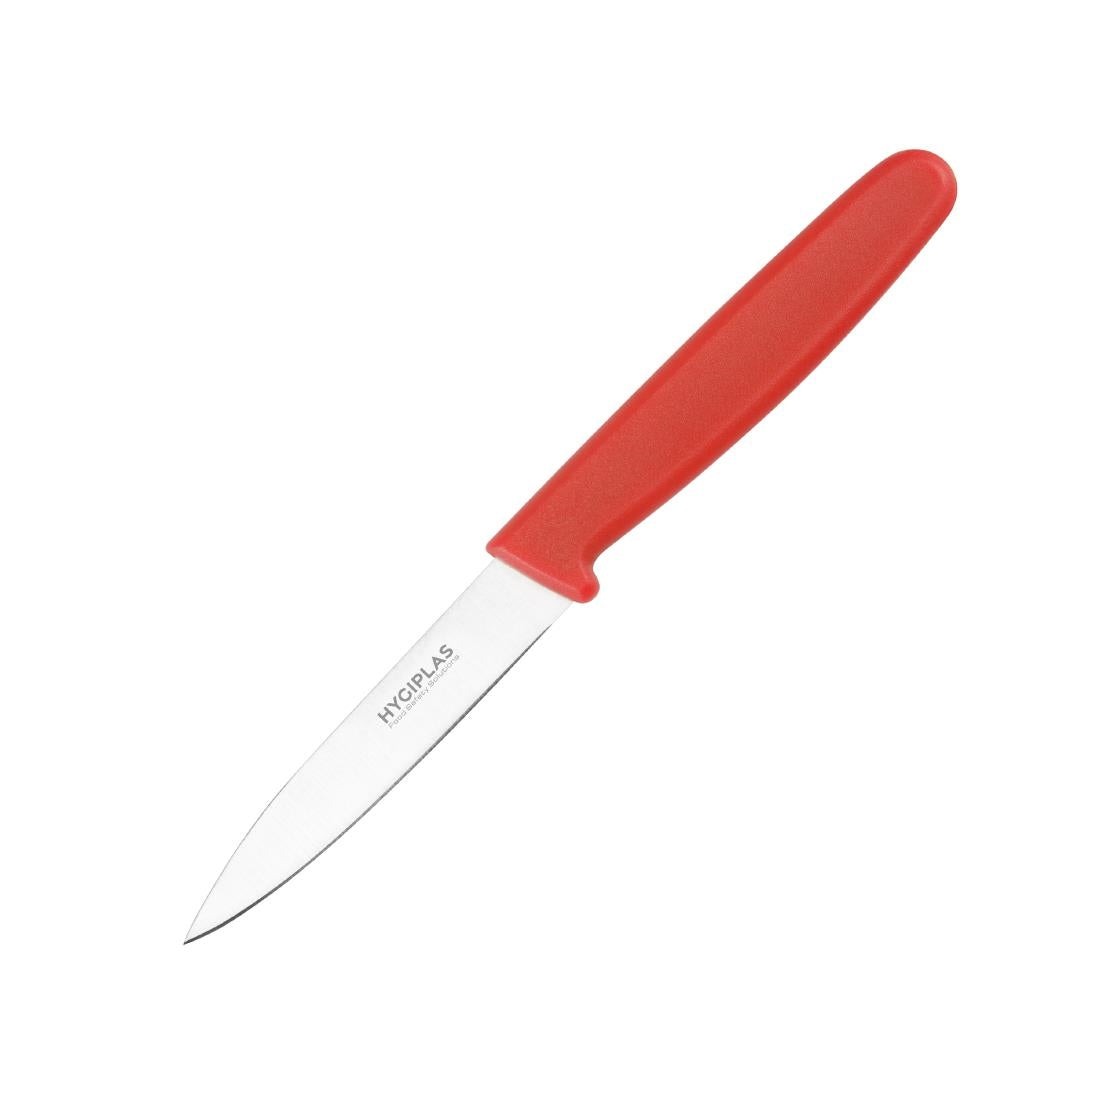 C542 Hygiplas Paring Knife Red 7.5cm JD Catering Equipment Solutions Ltd